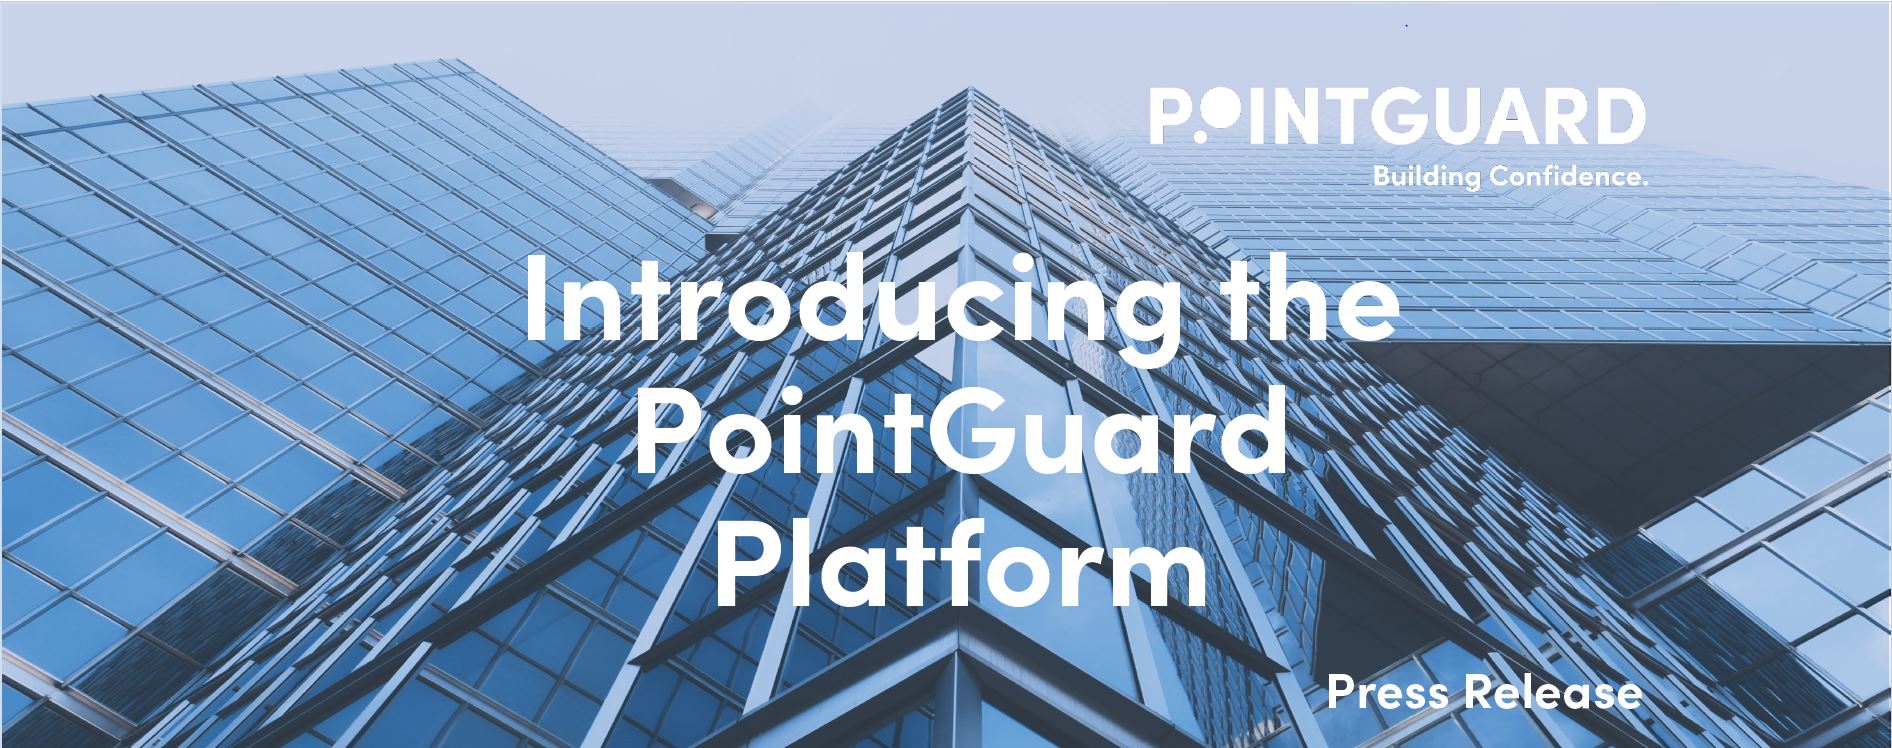 Introducing the PointGuard Platform